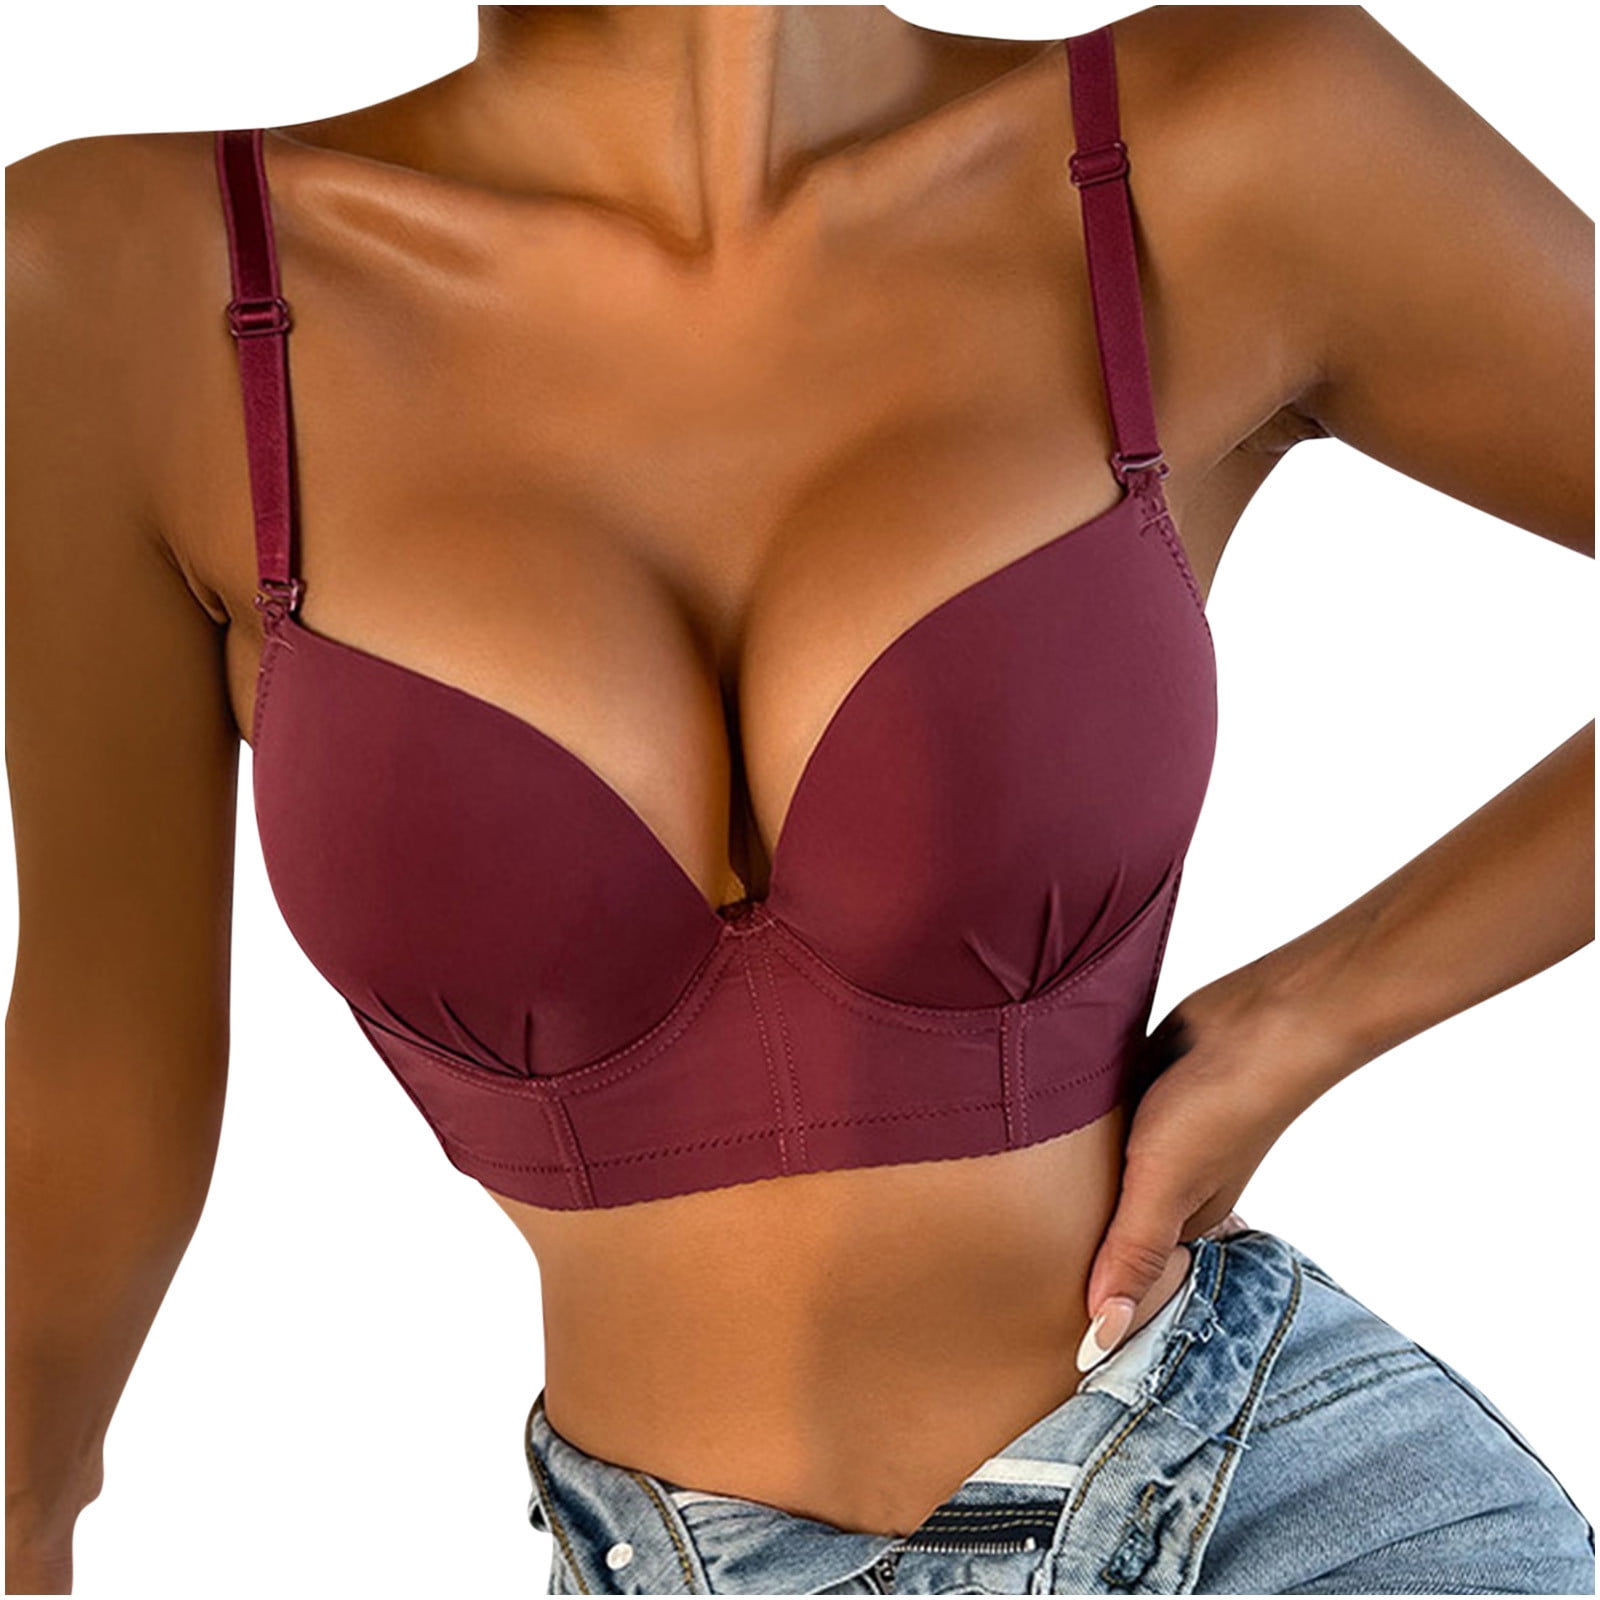 JGGSPWM Woman Sexy Breast-receiving Bra Without Steel Rings Sexy Vest  Lingerie Underwear Wine M 